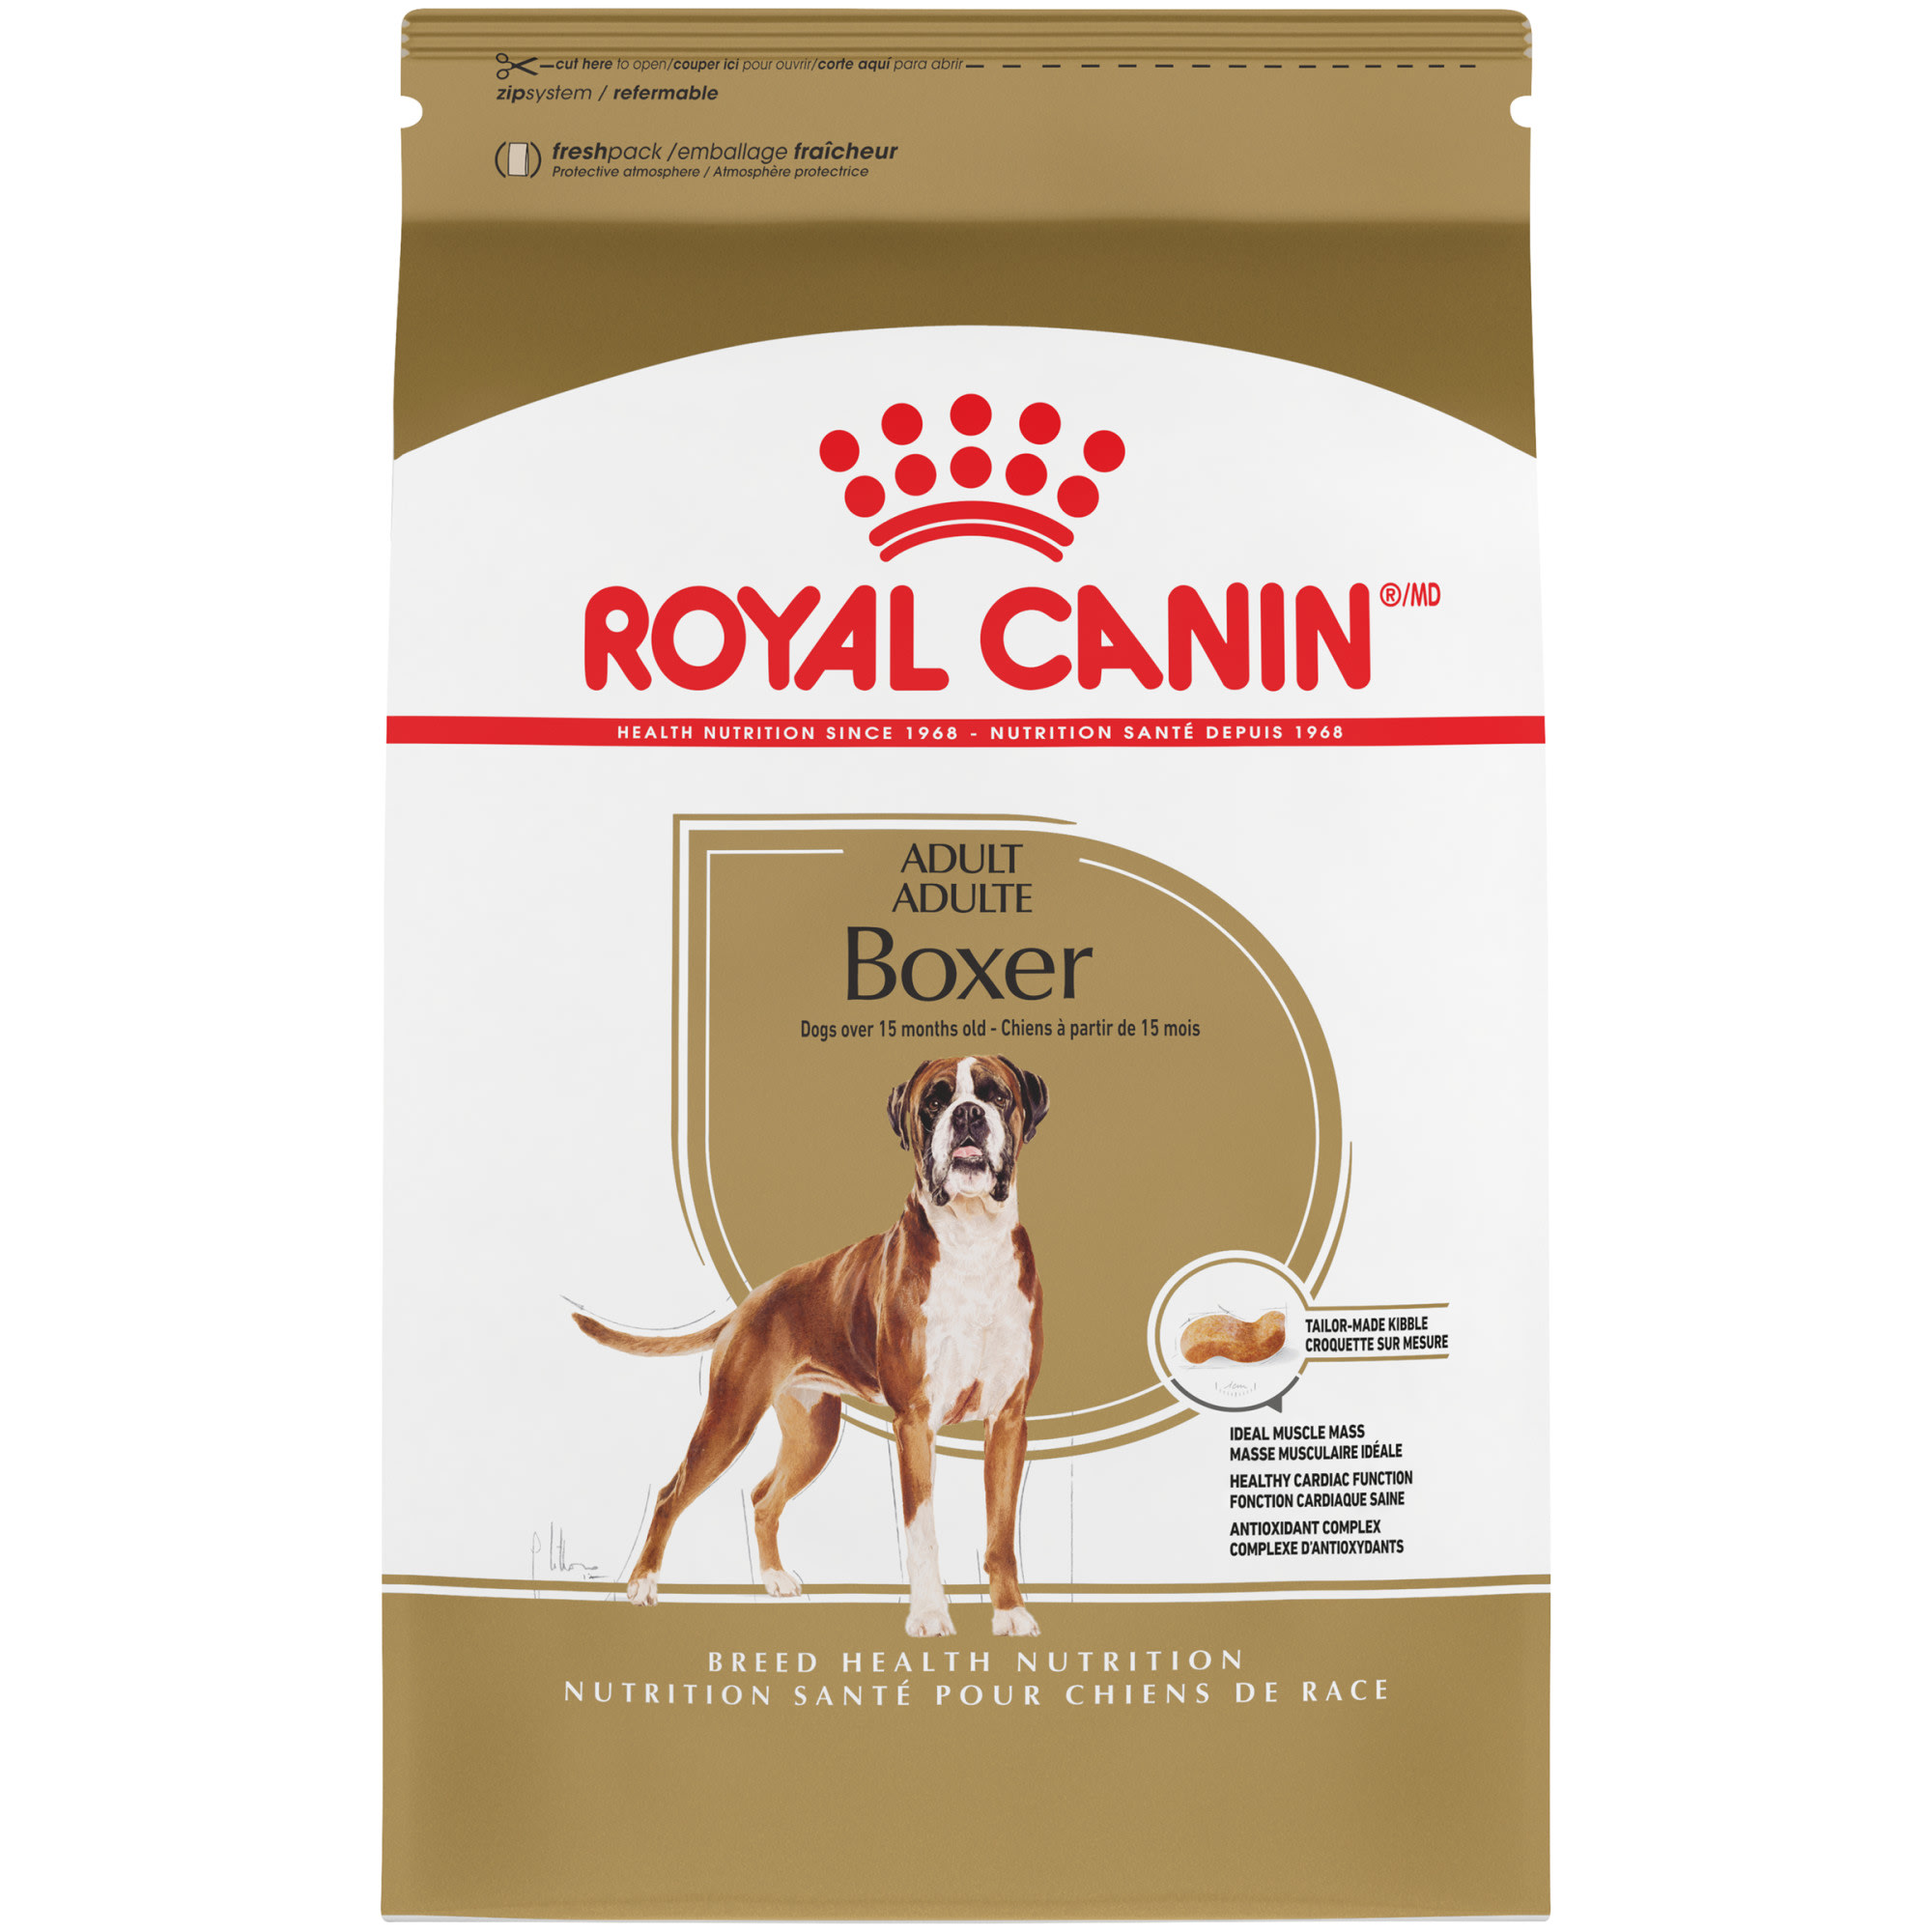 royal canin boxer dog food